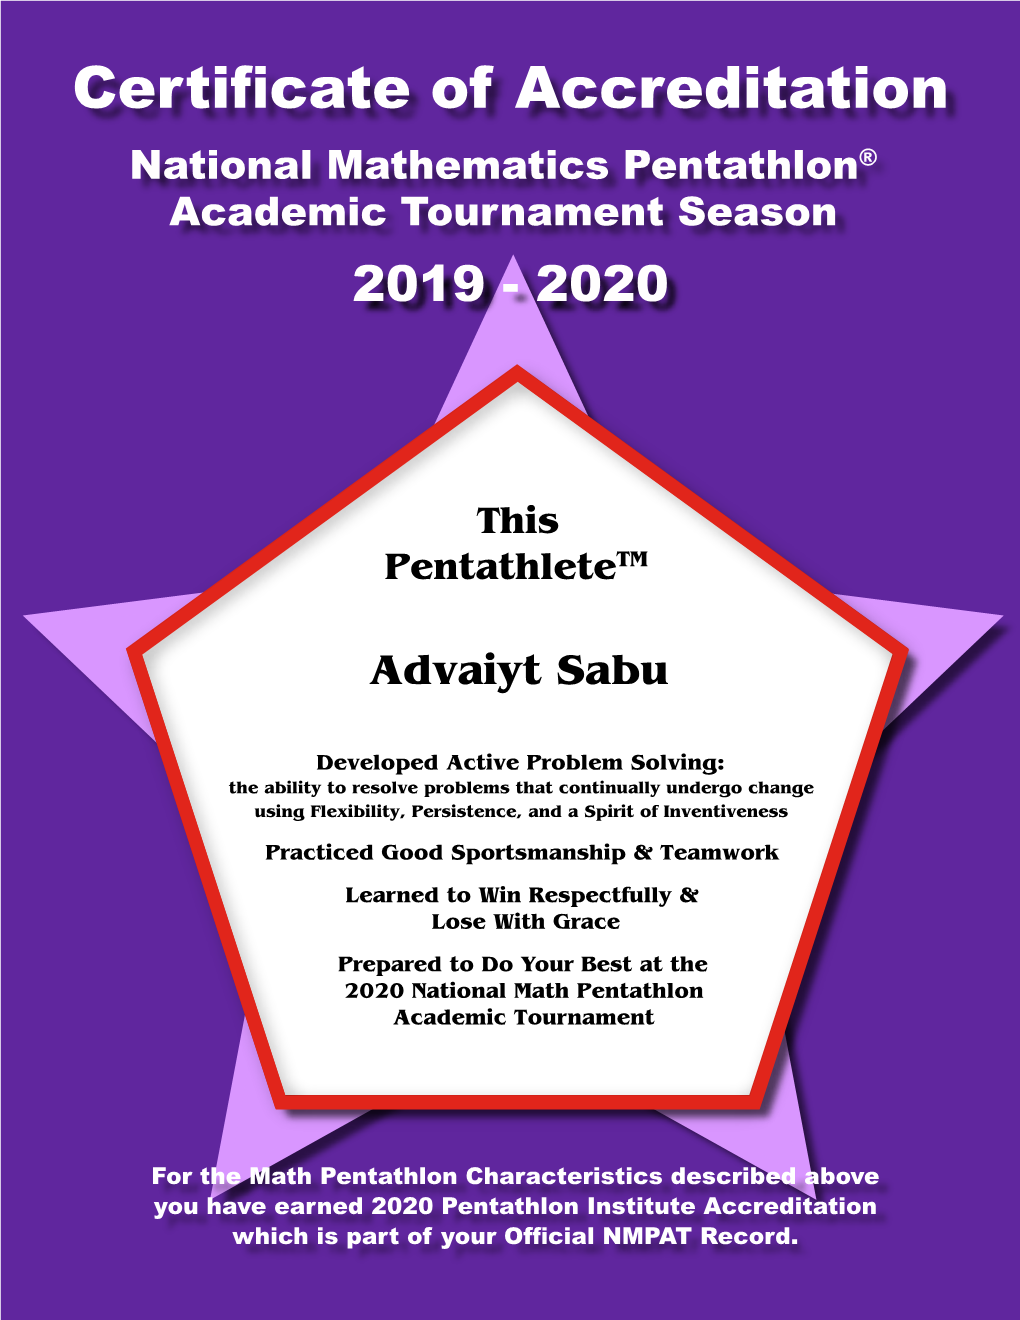 Certificate of Accreditation National Mathematics Pentathlon® Academic Tournament Season 2019 - 2020